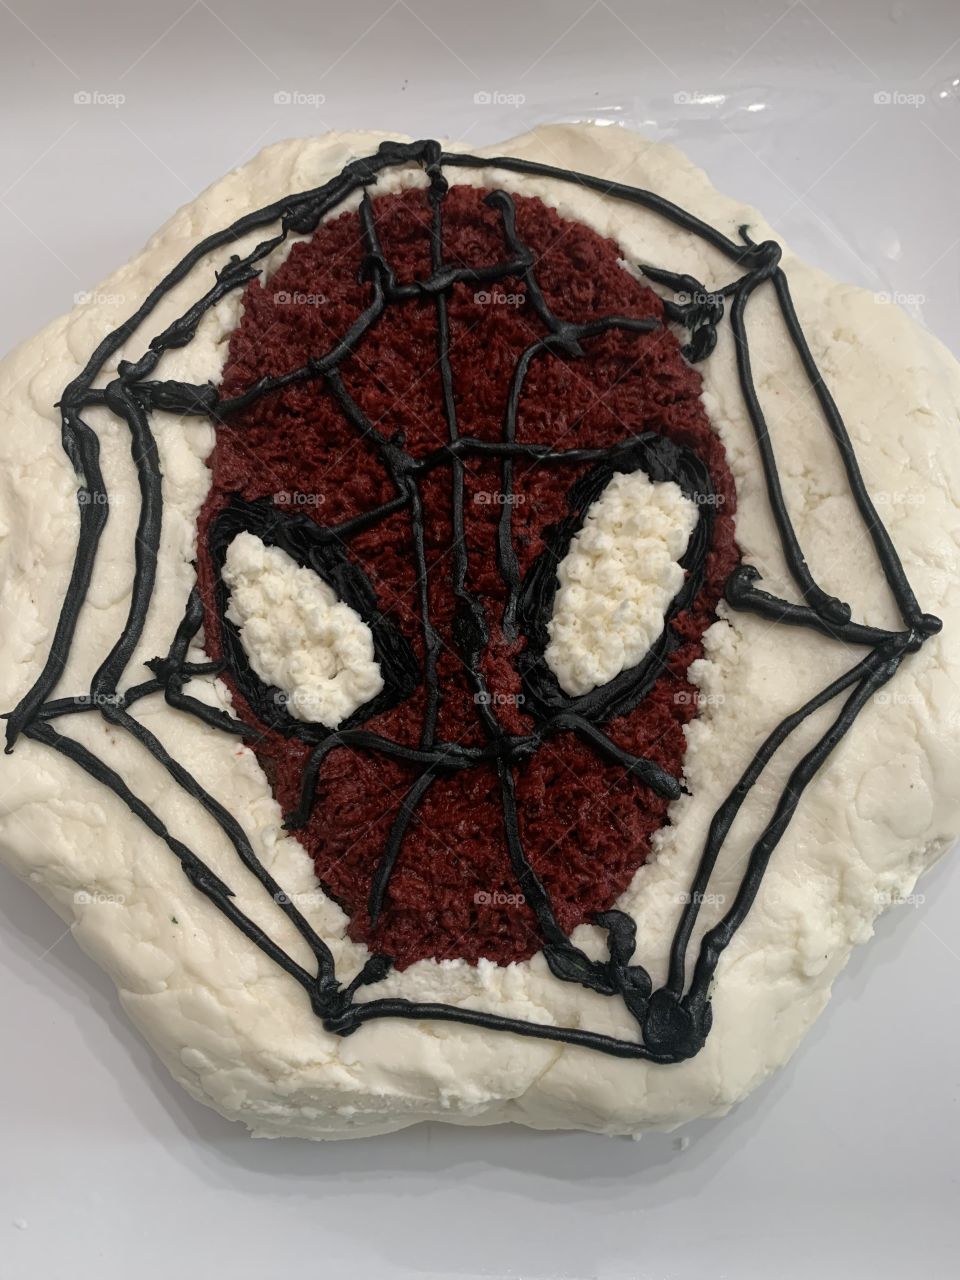 Spider-Man birthday cake 